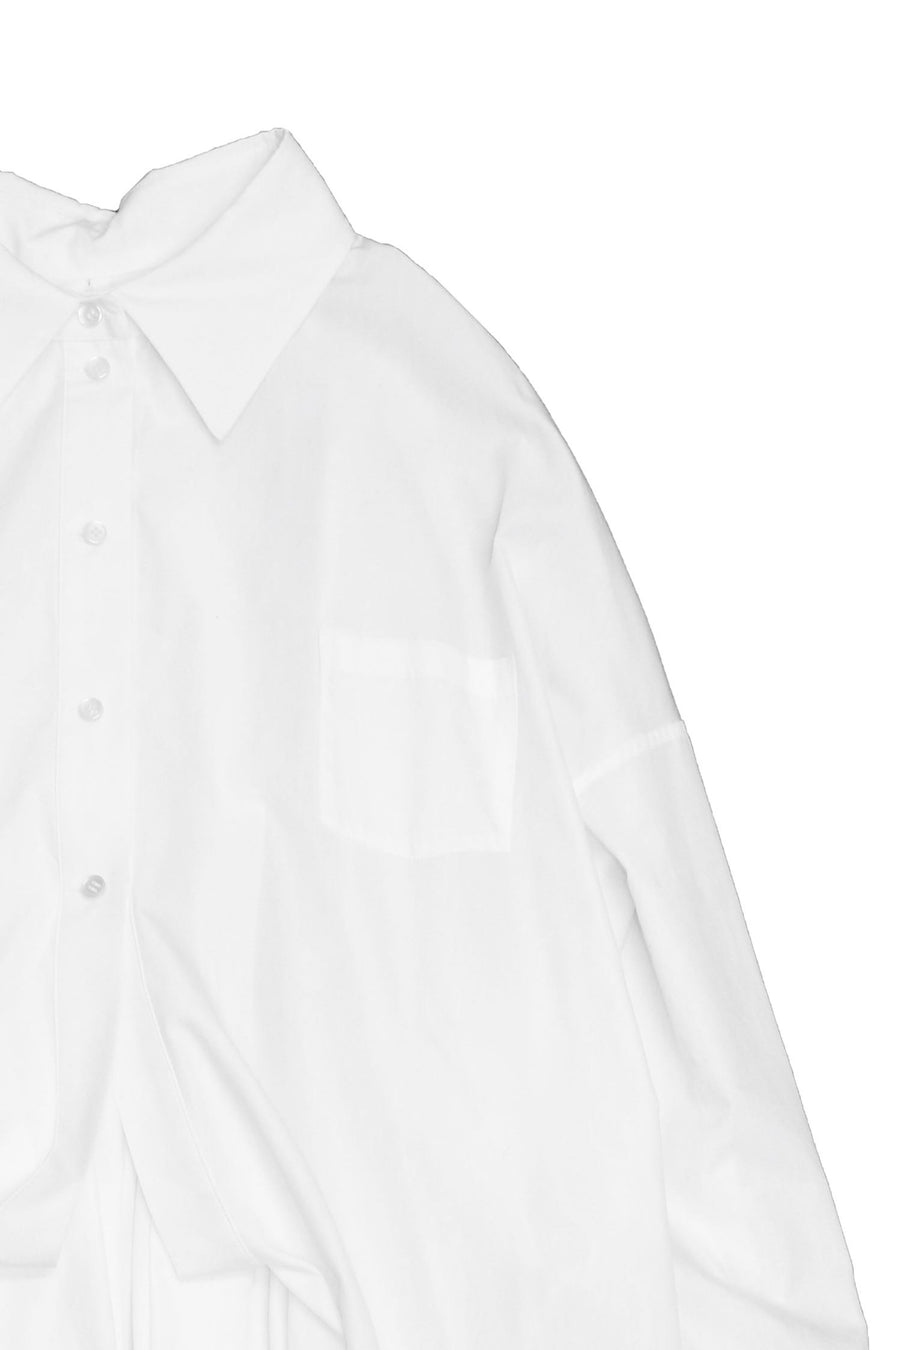 AKIKOAOKI(アキコアオキ)の2 way shirt dress 02 WHITEの通販｜PALETTE ...